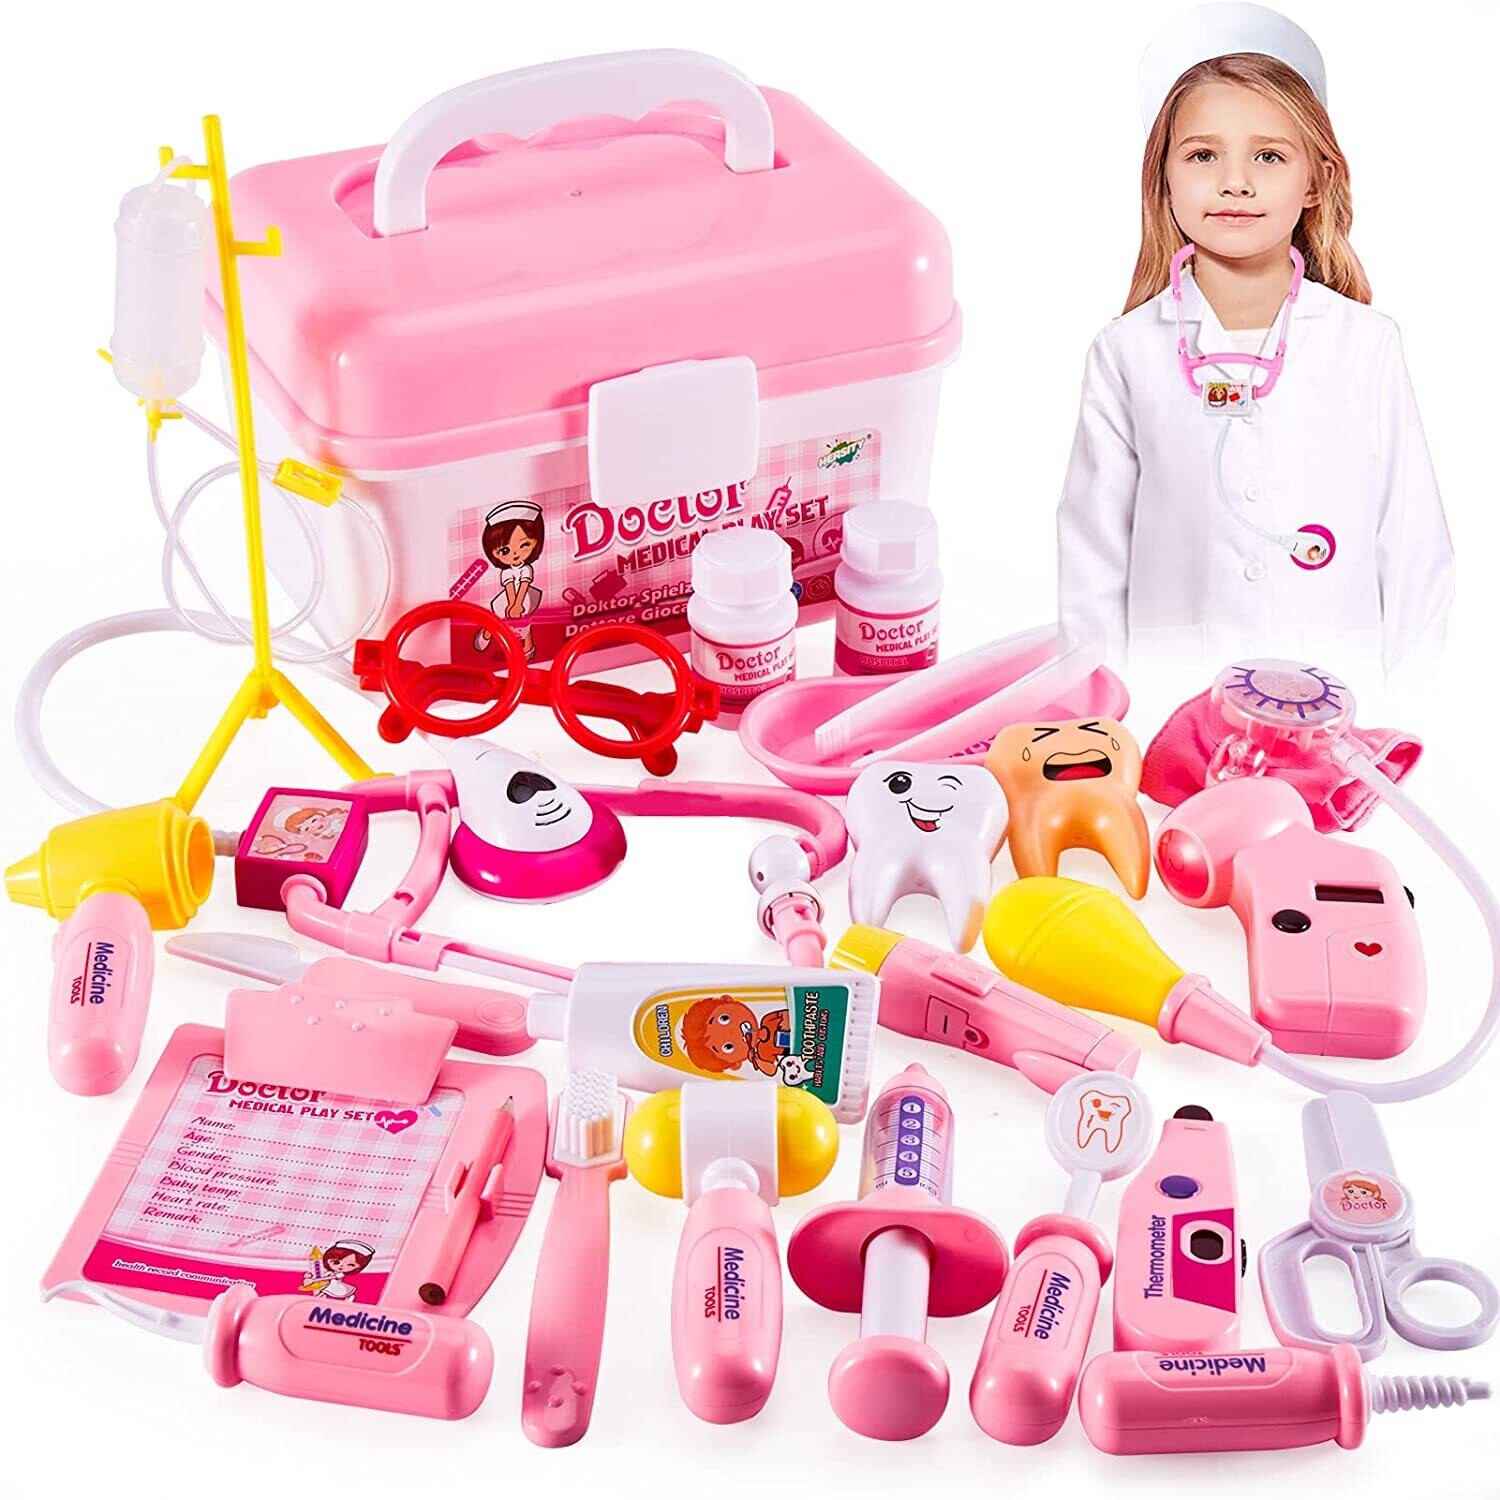 Toy Medical Playset Nurses Costume Role